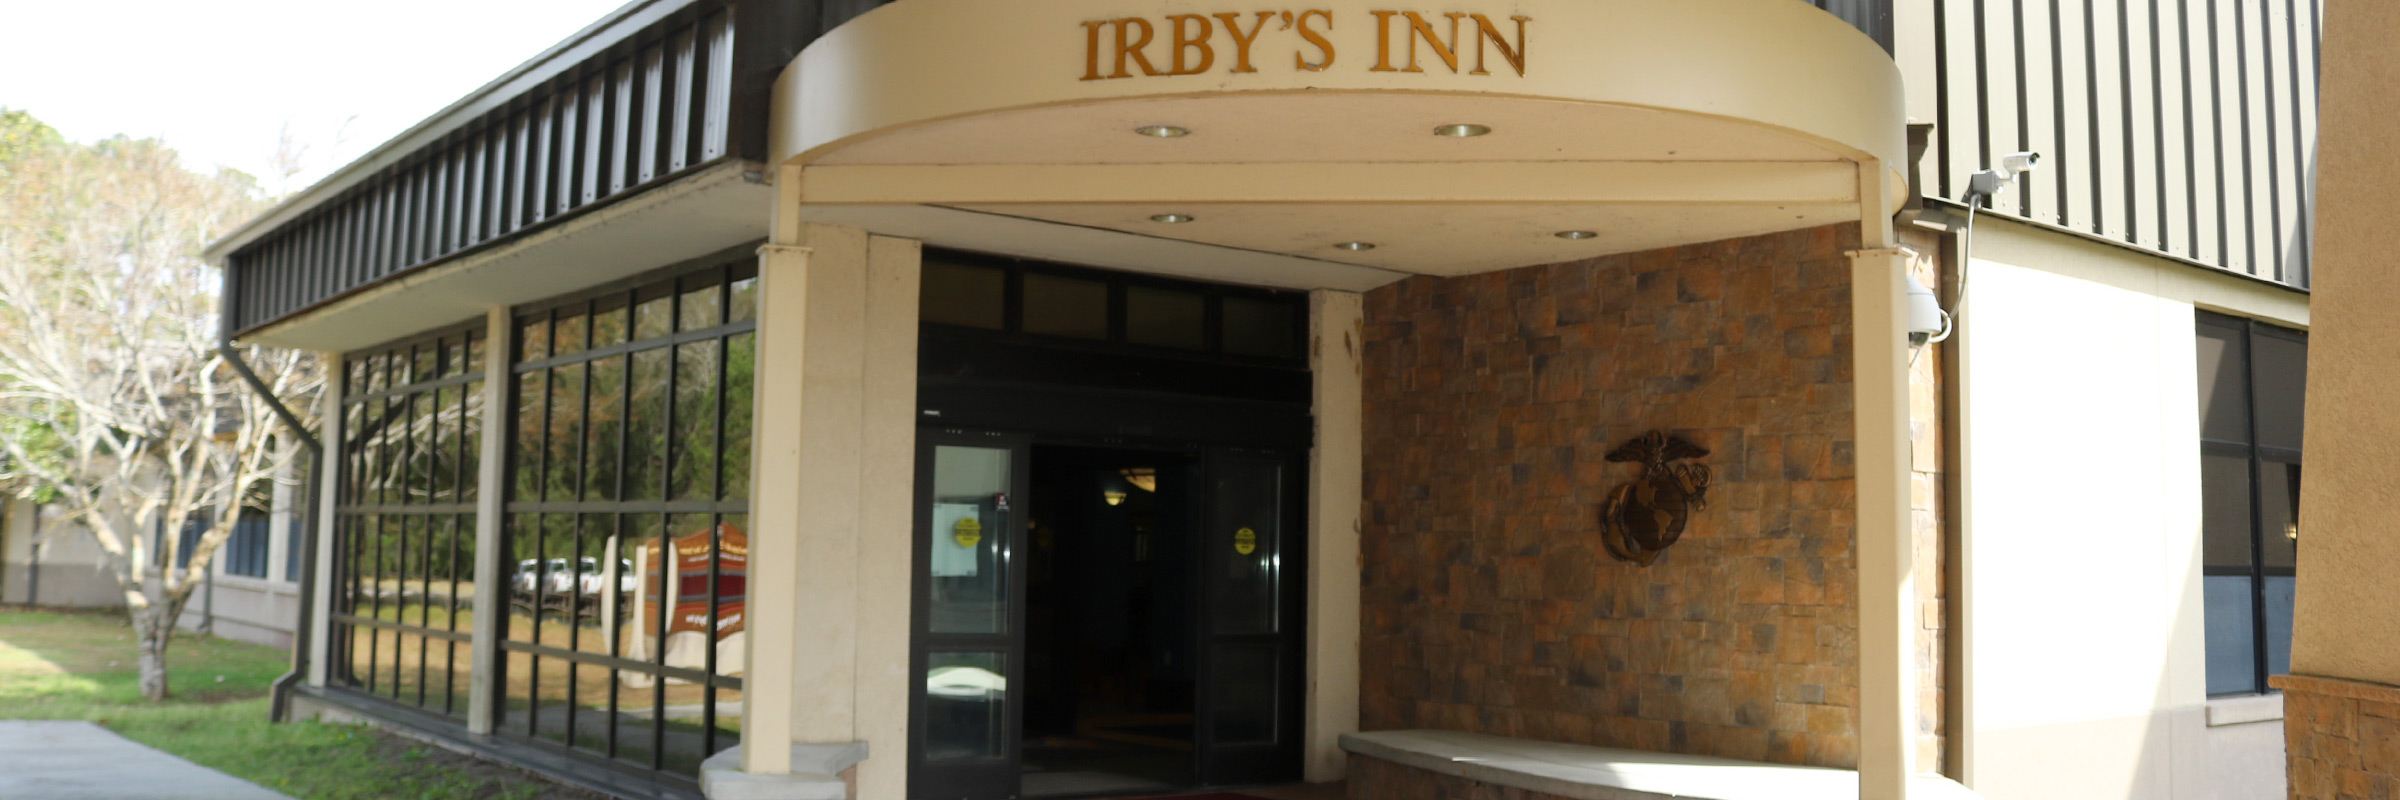 Irbys-Inn-HiRez.jpg